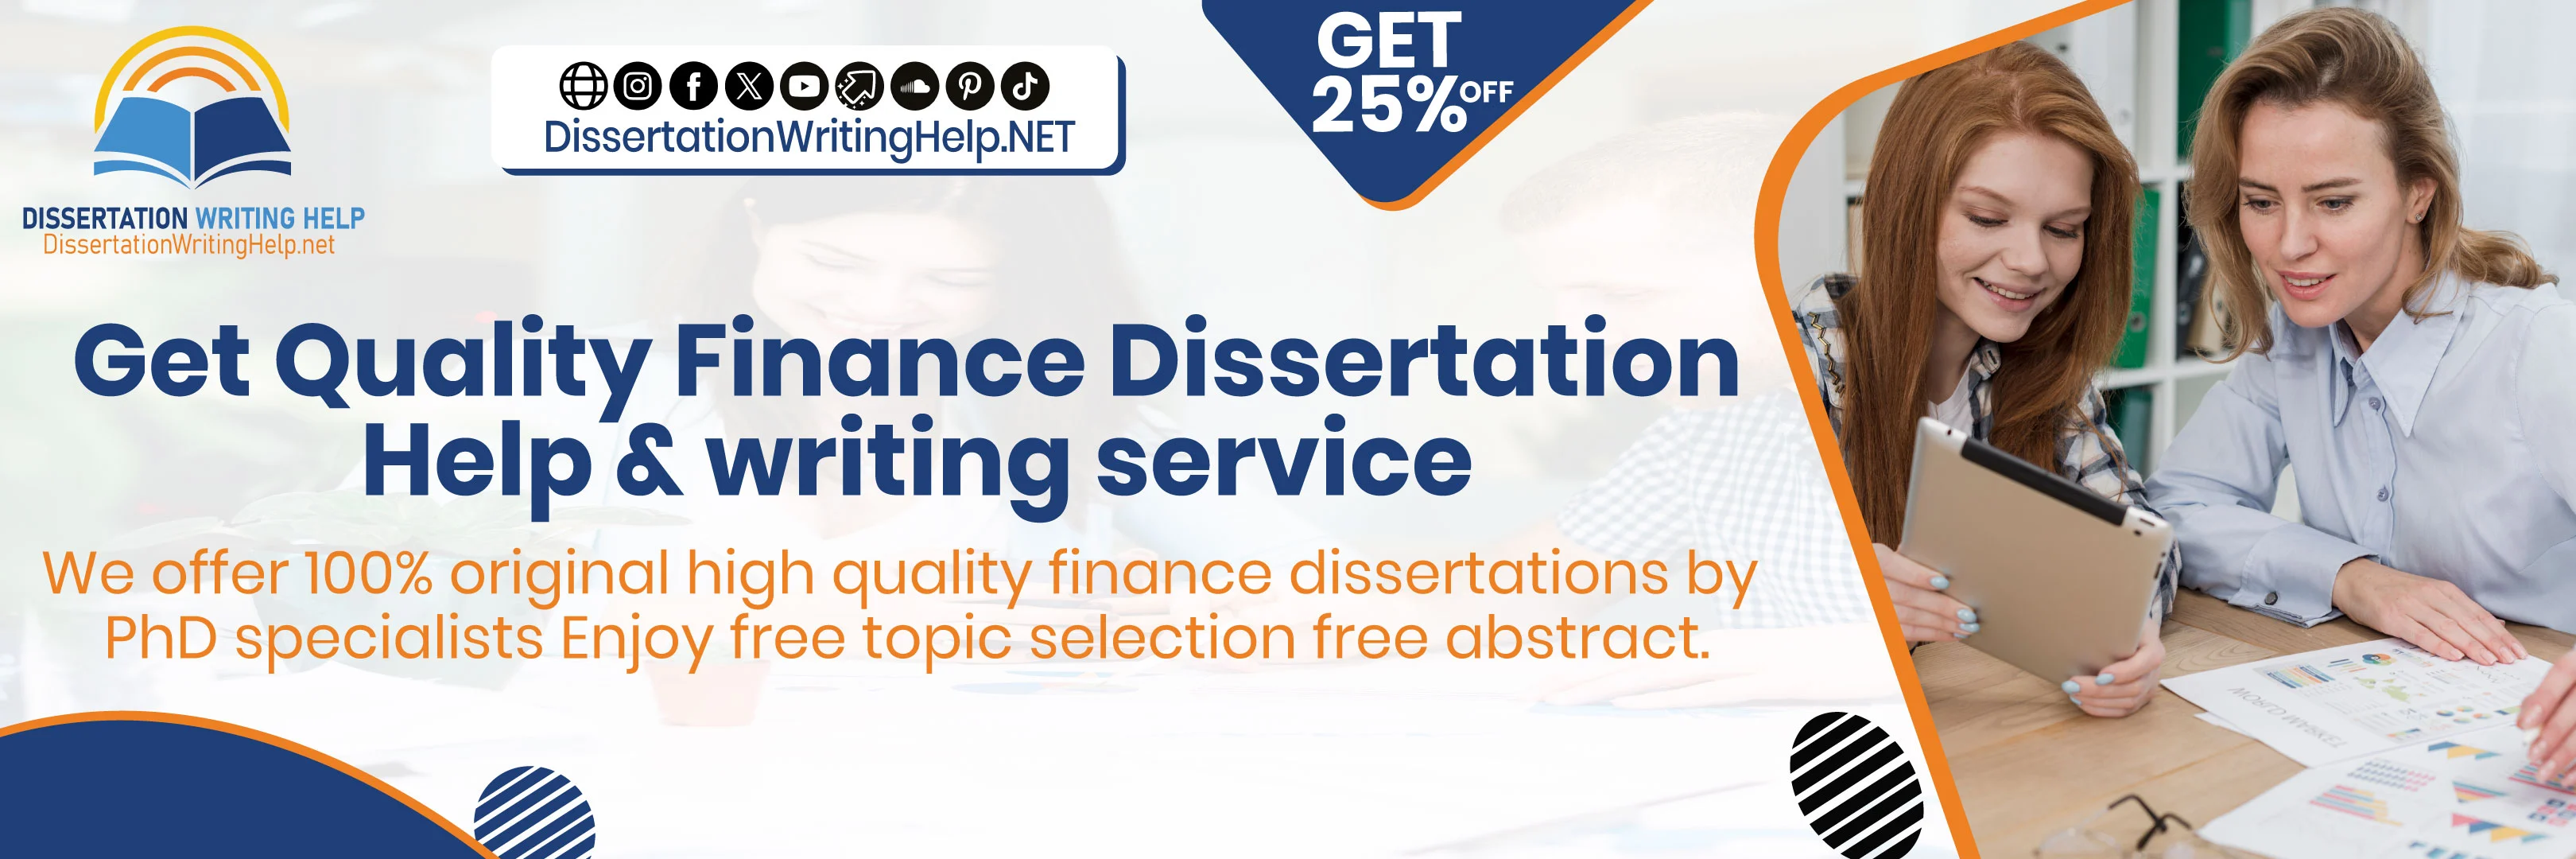 Get Quality Finance Dissertation